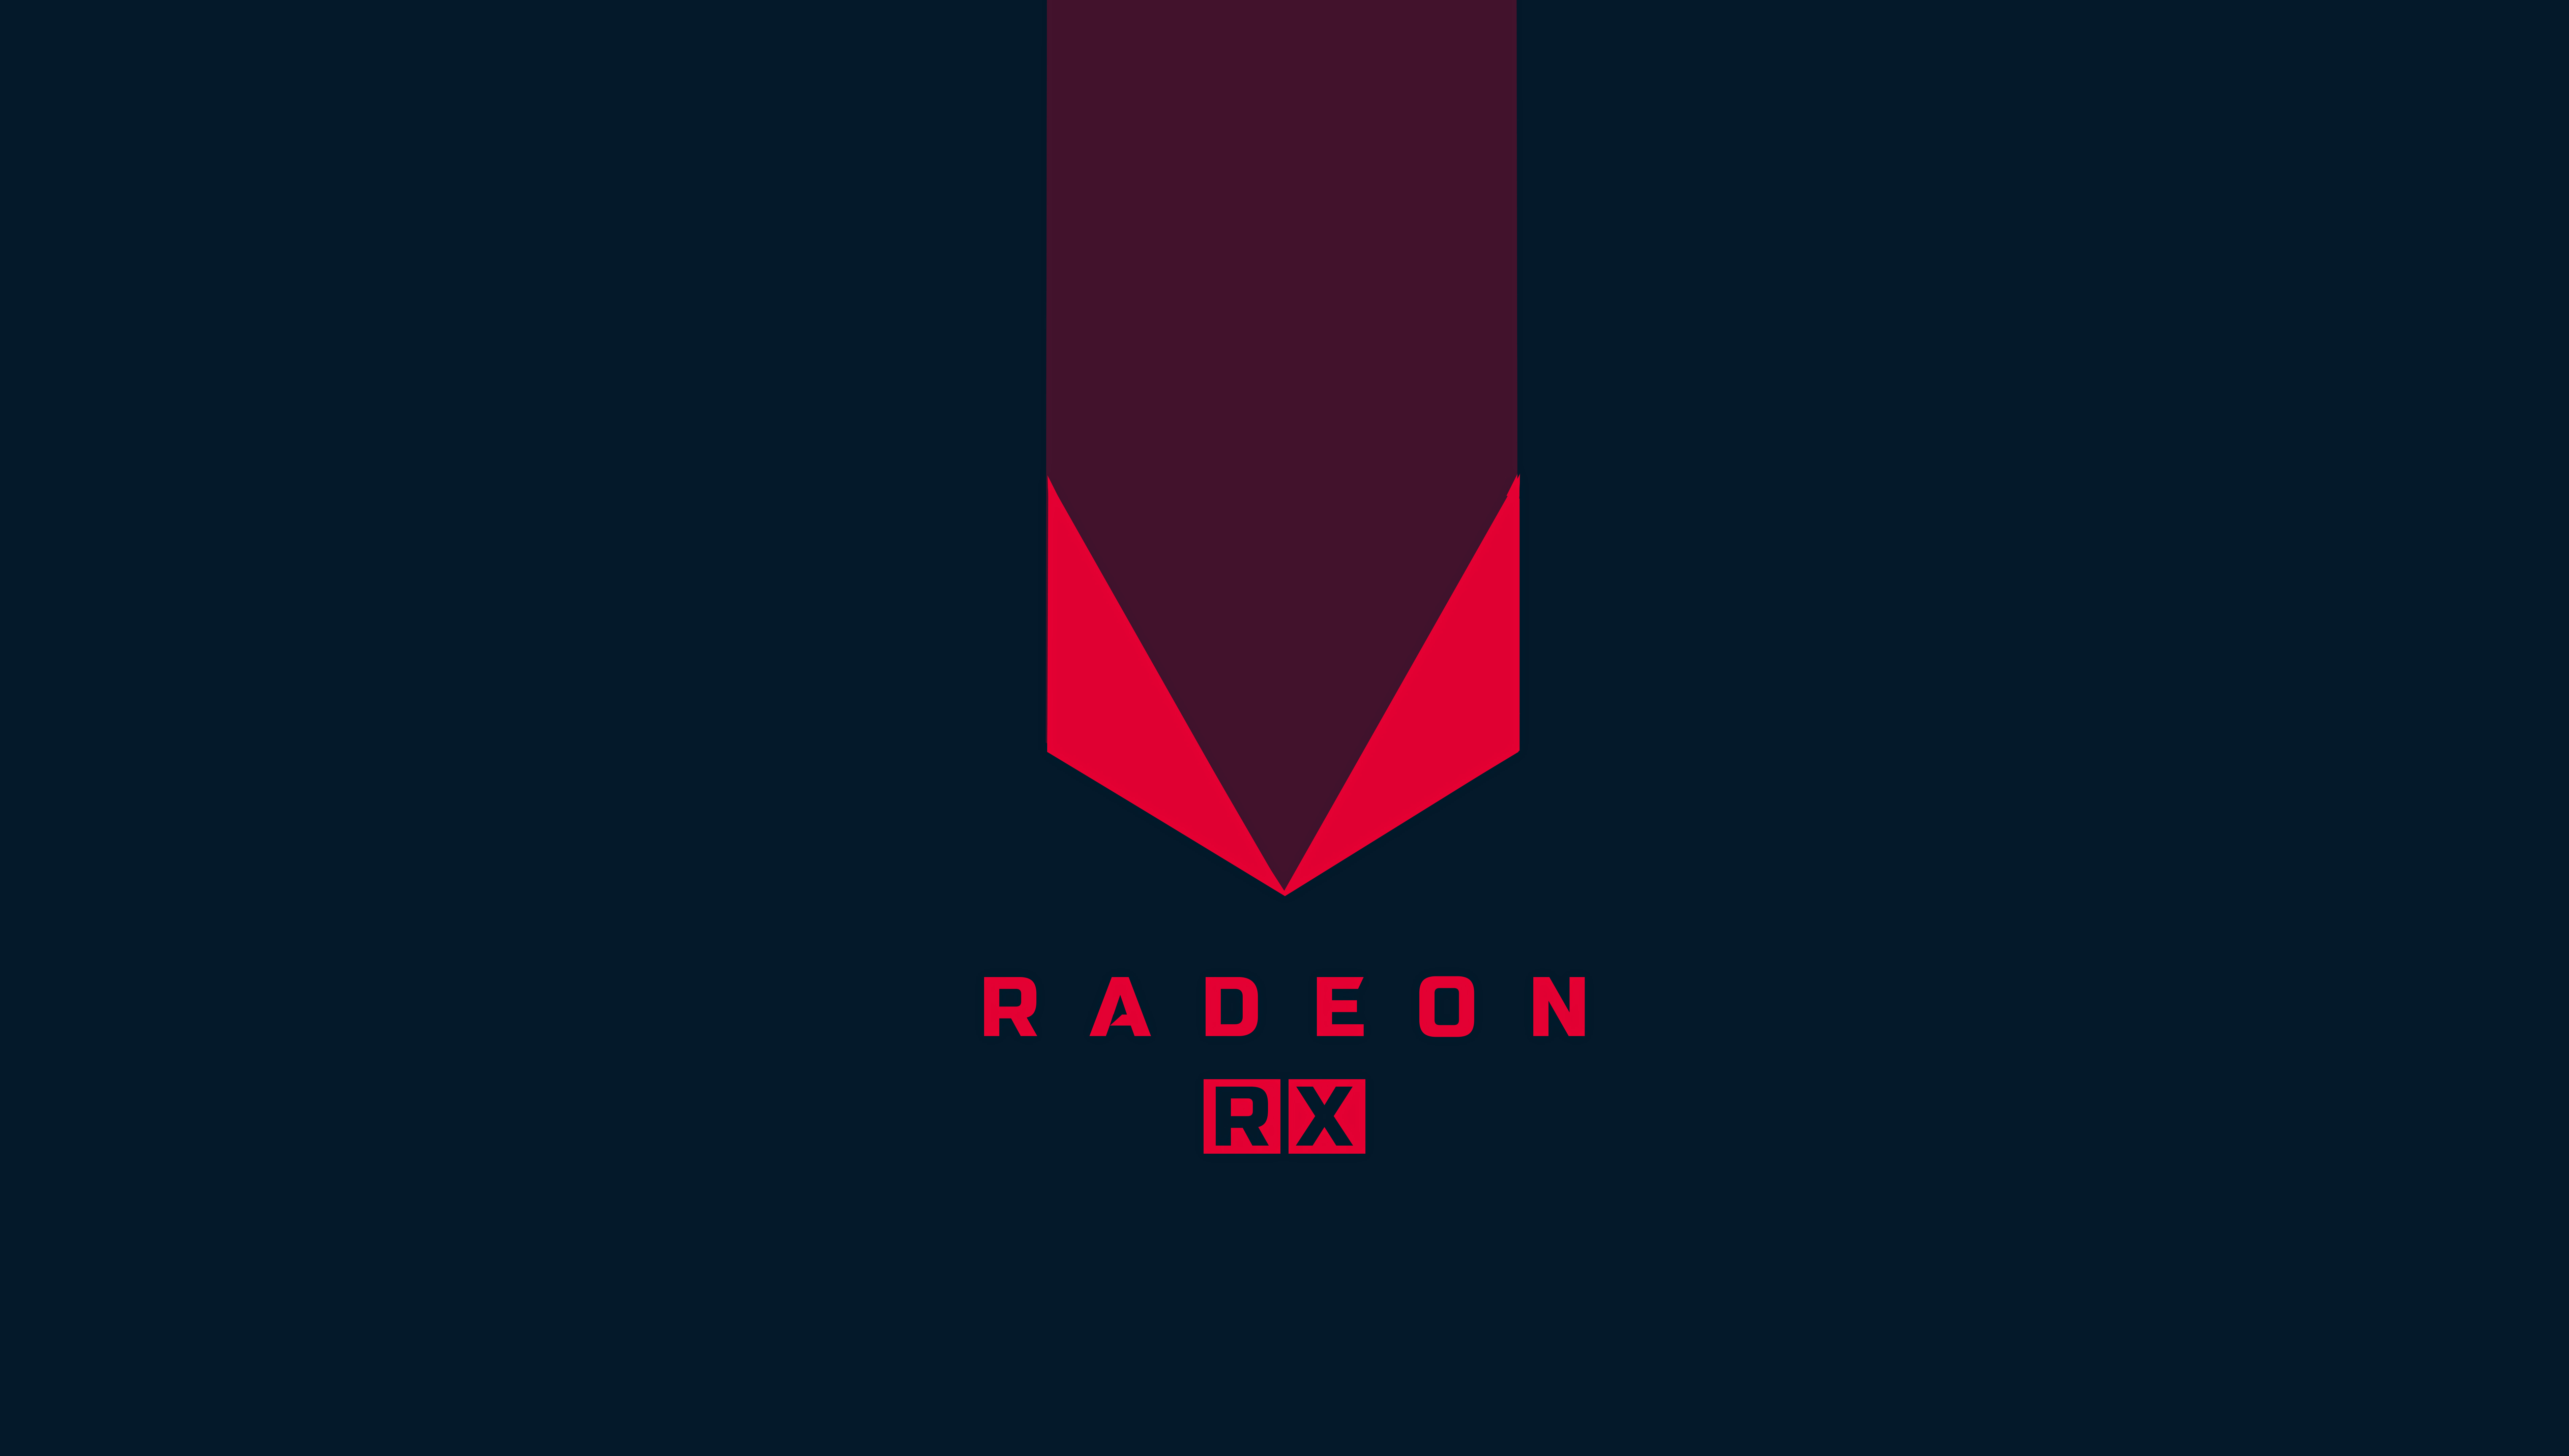 radeon, technology, amd, red